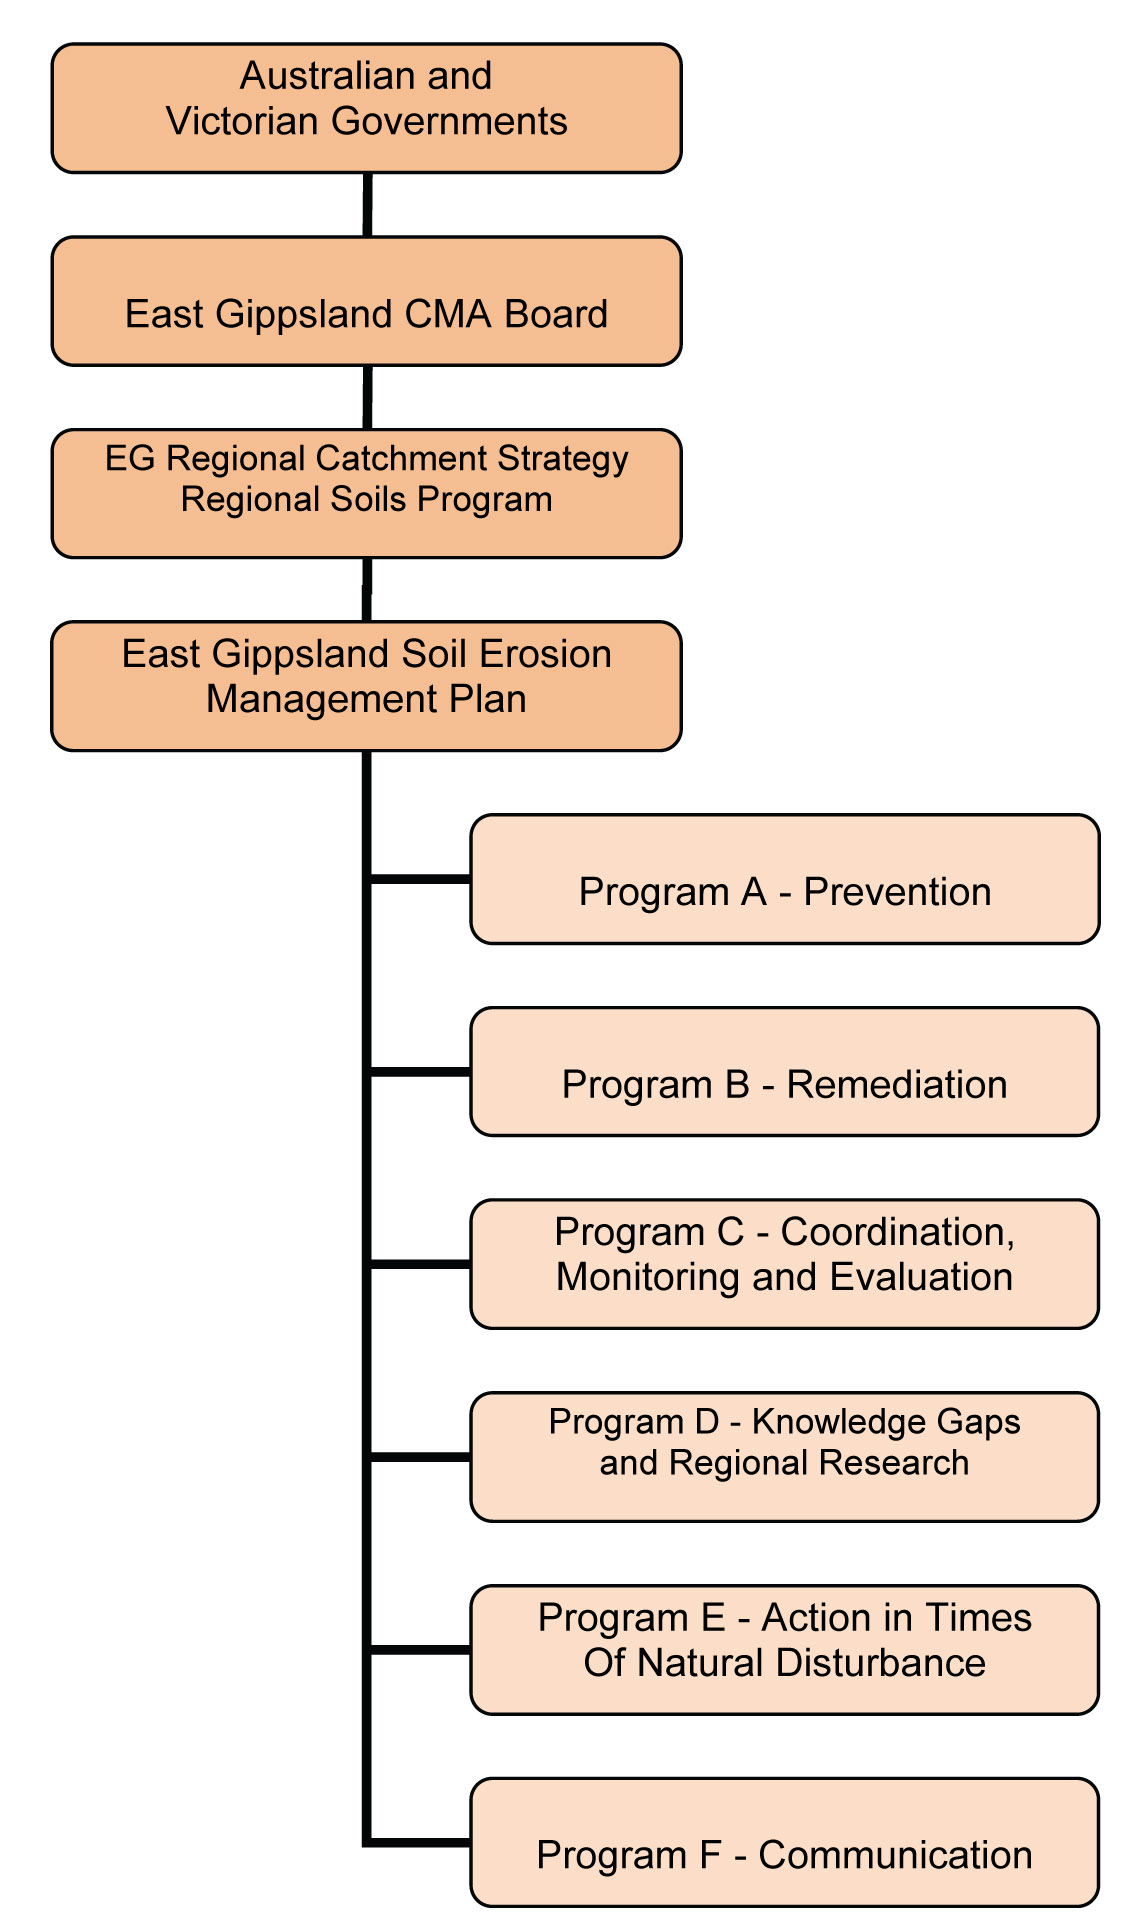 East Gippsland Soil Erosion Management Plan - Figure 27